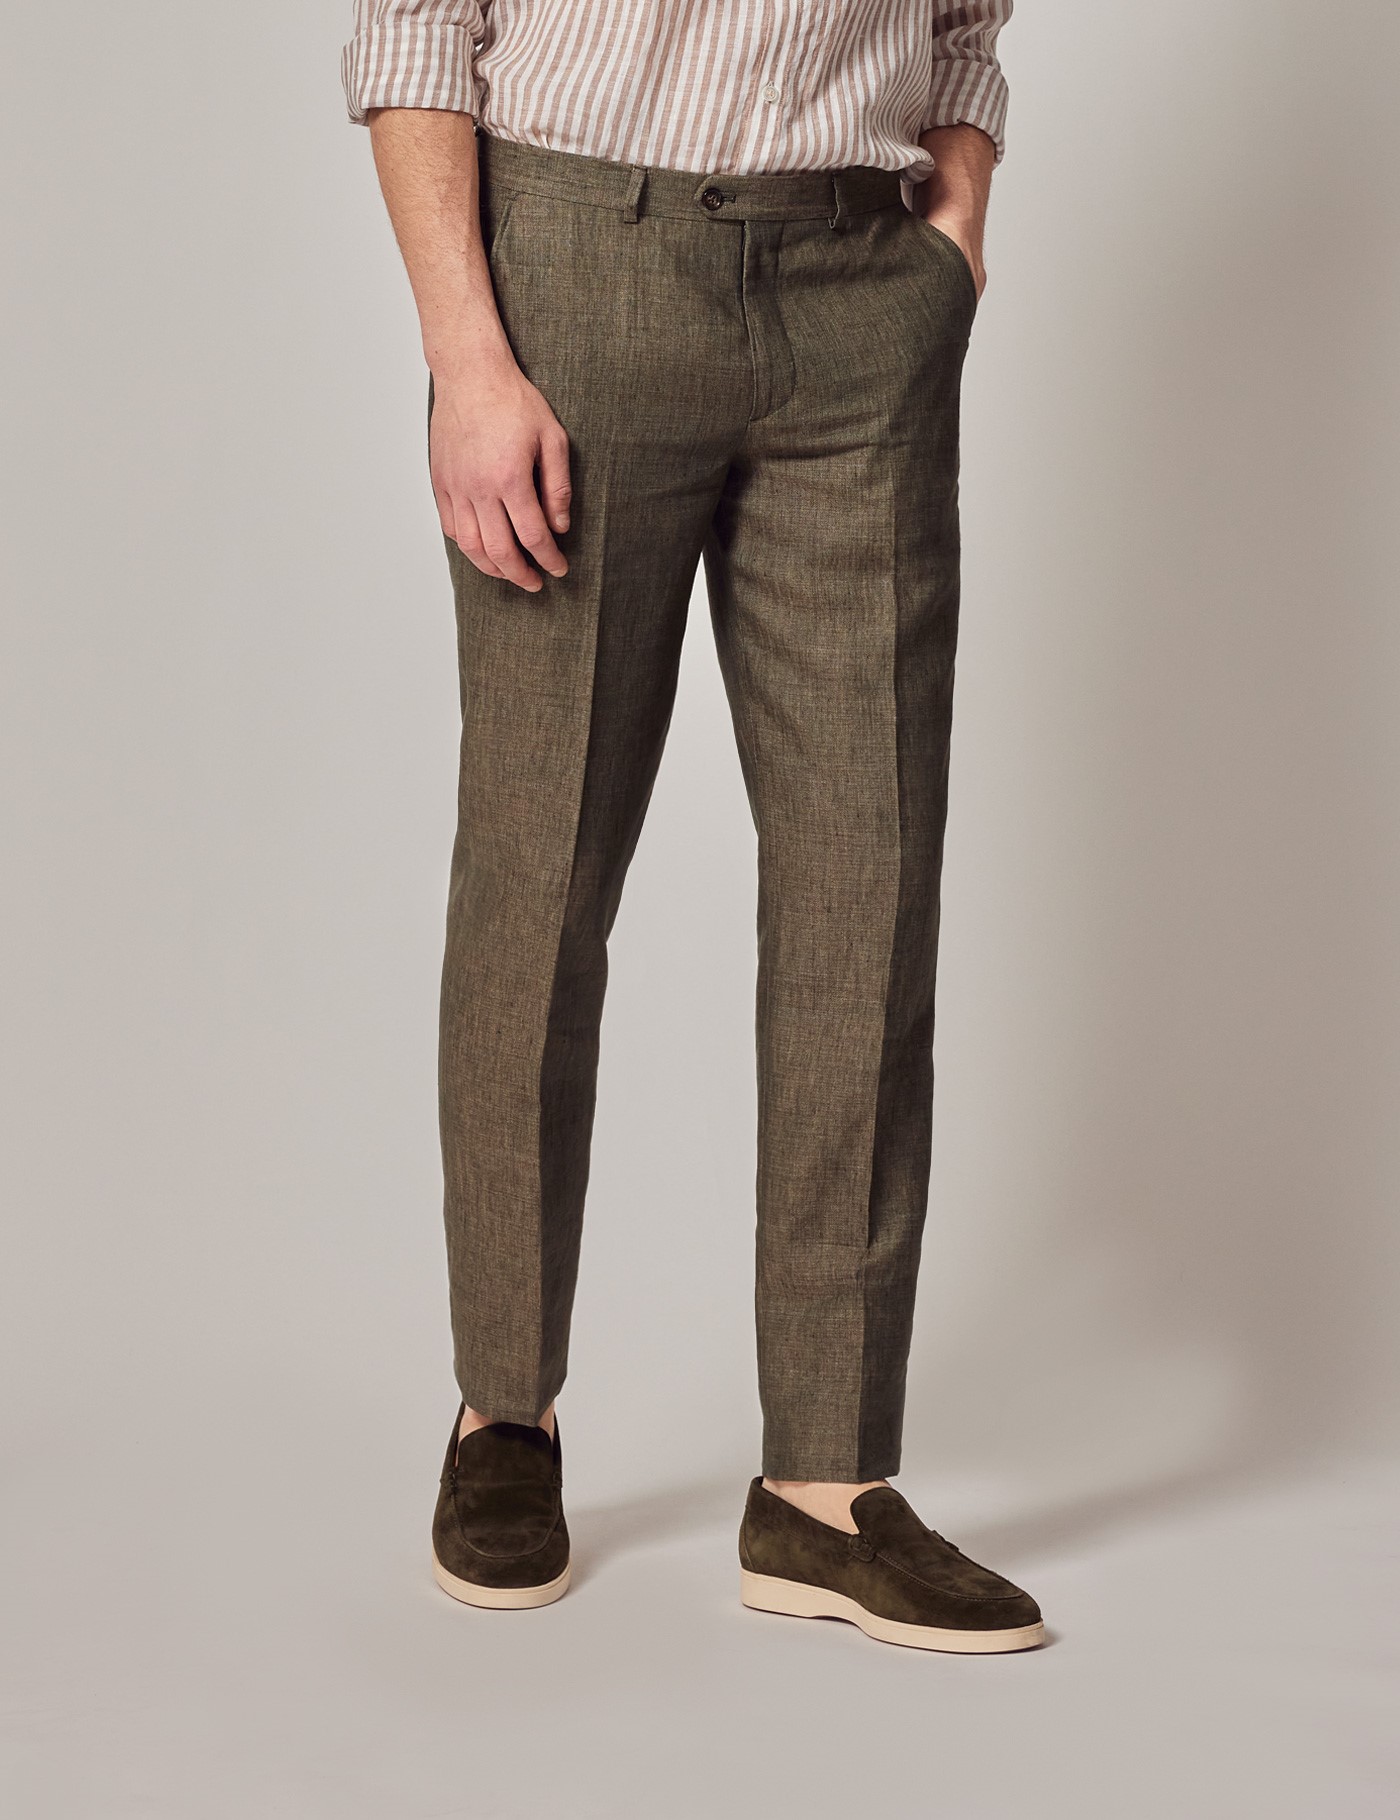 Shop mens trousers chinos jeans  belts online  MEYER Hosen